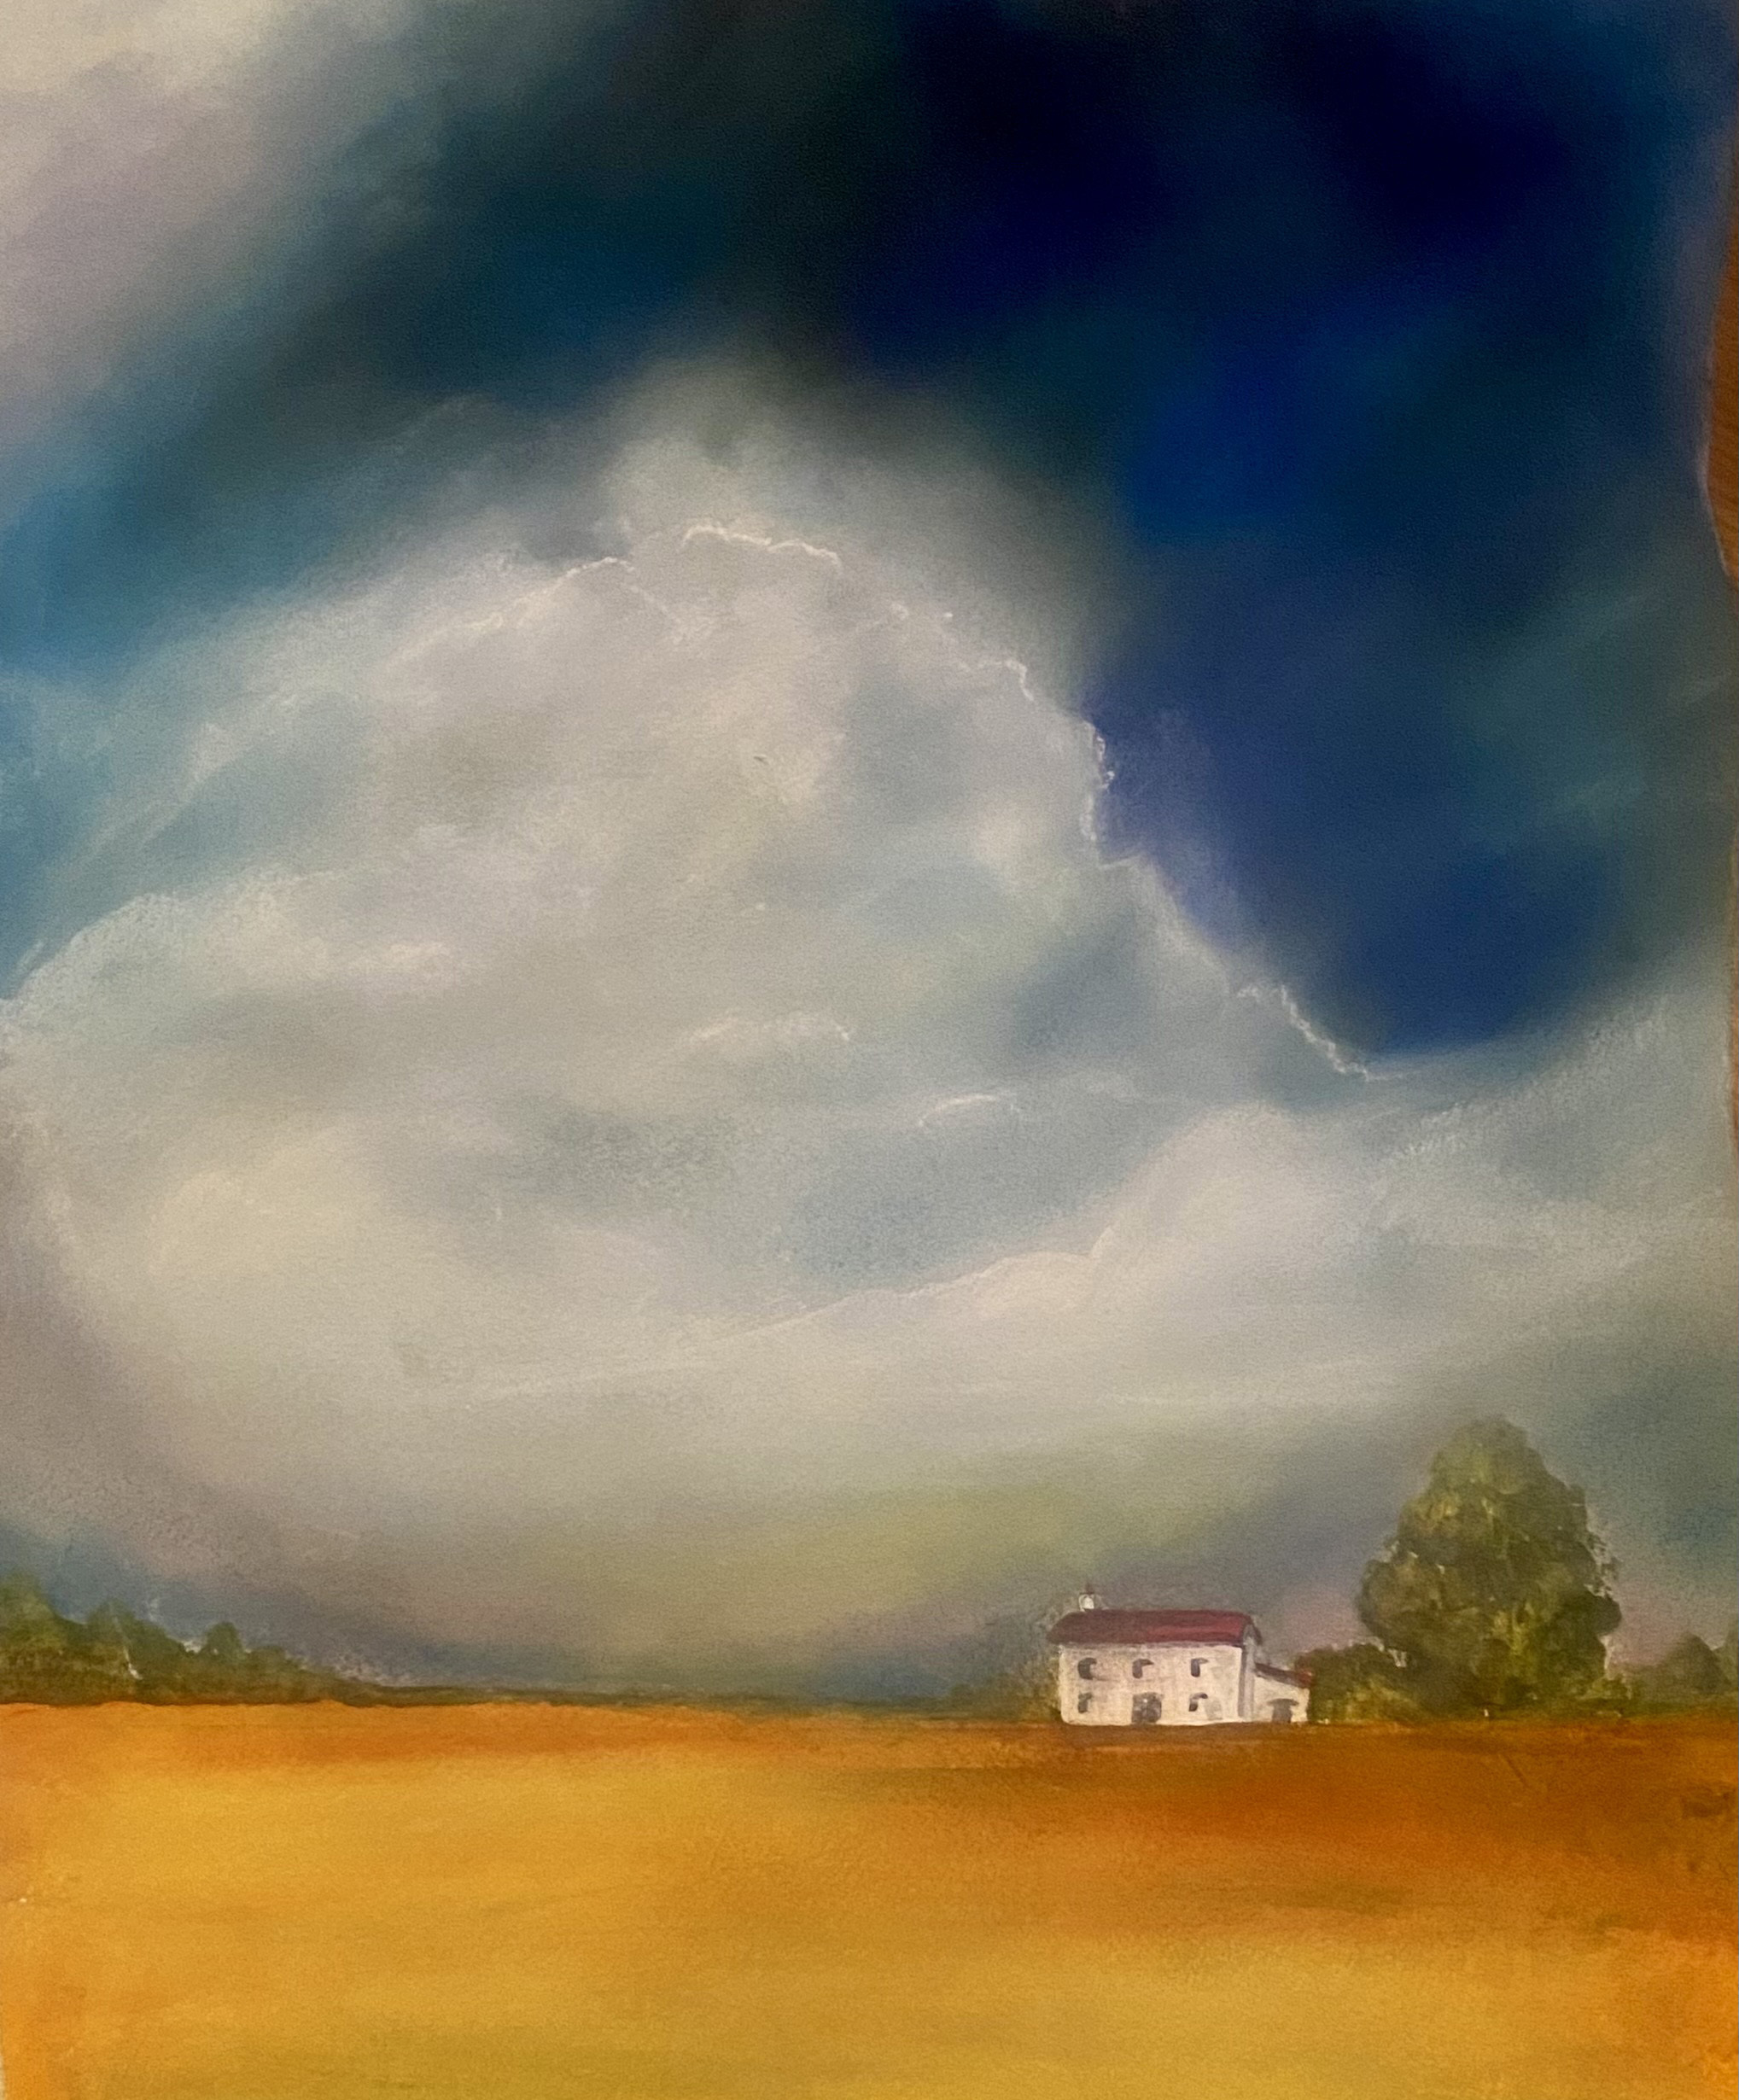 Red Barn Studio - The Storm - June 16 Image